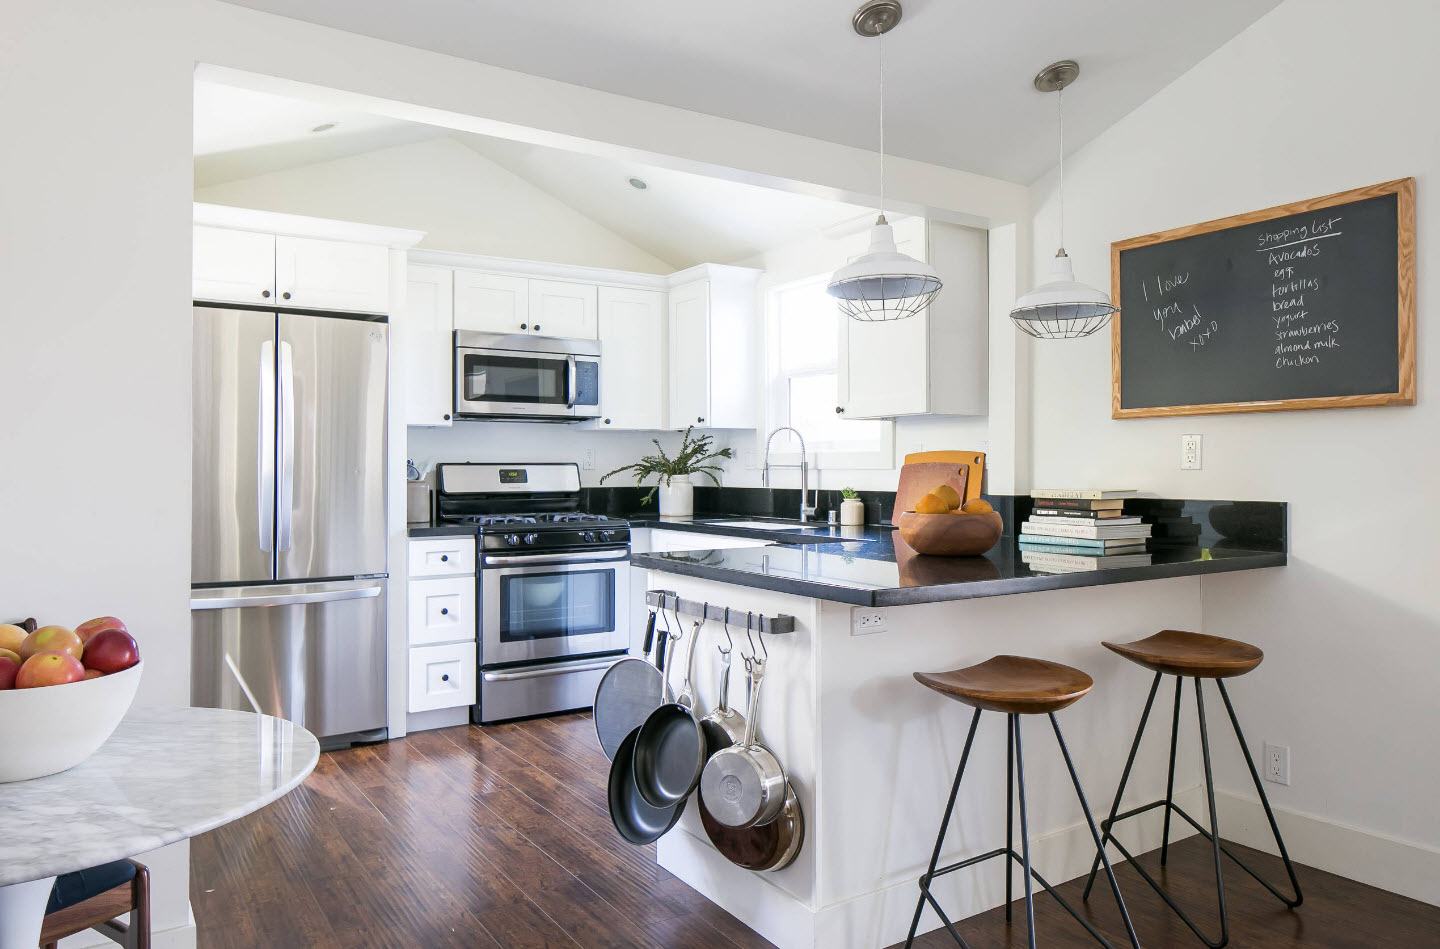 120 Square Feet Kitchen Interior Design Ideas with Photos. White trimmed walls and dark wooden floor